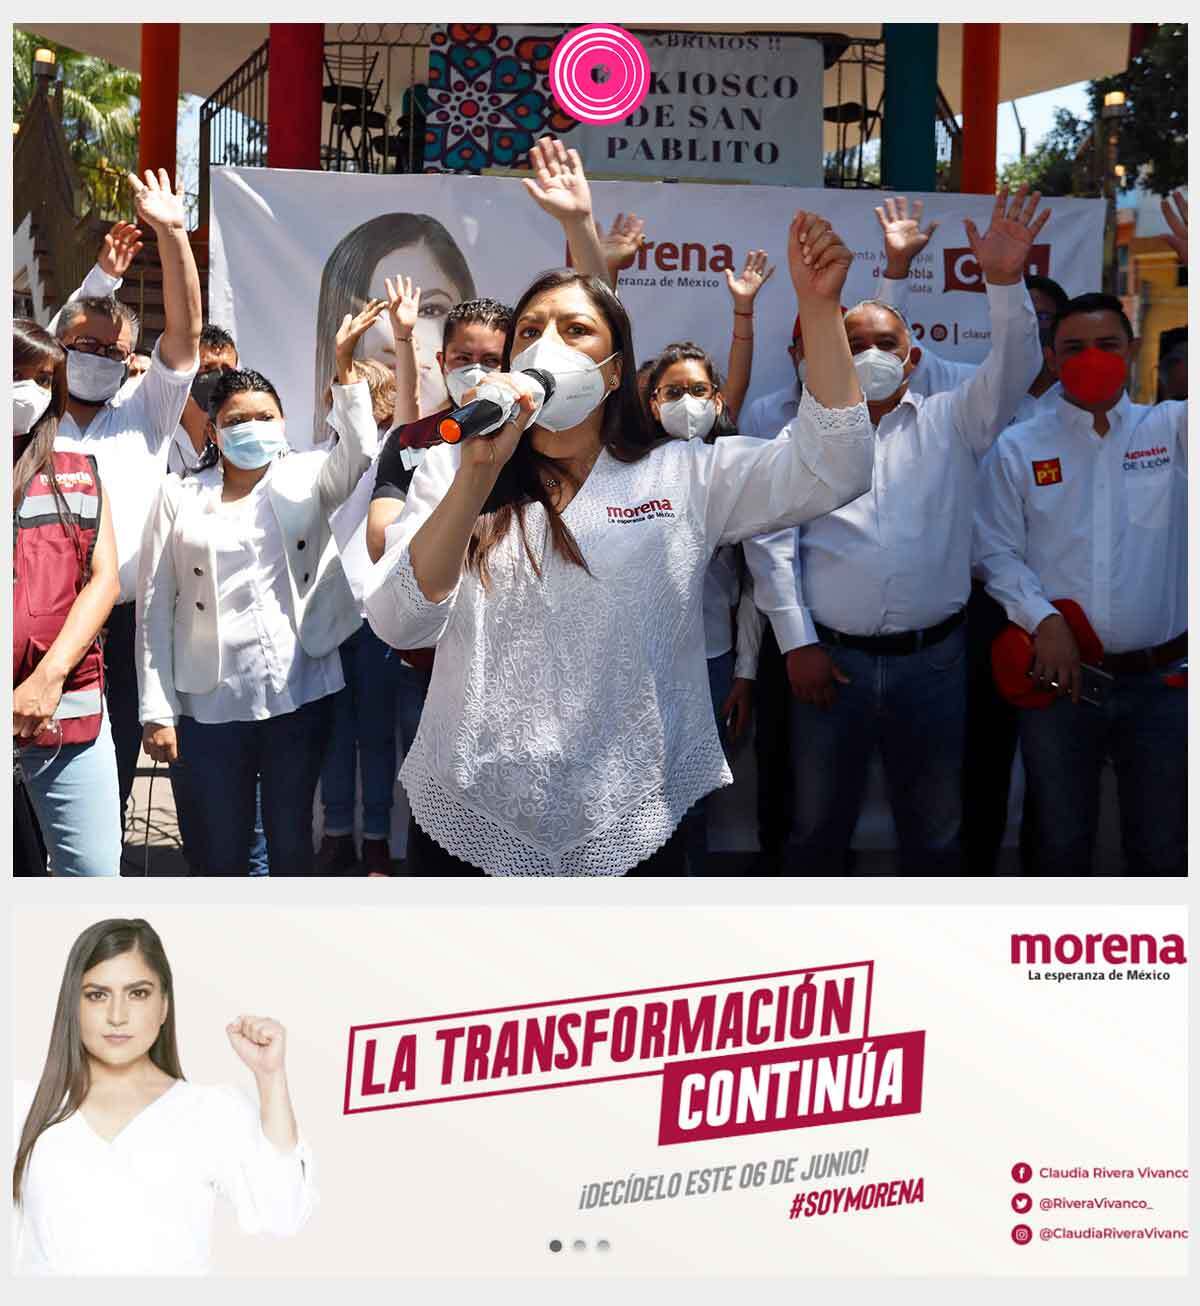 Claudia Rivera, candidata de Morena a la alcaldía de Puebla usa el esloga “La esperanza continúa”